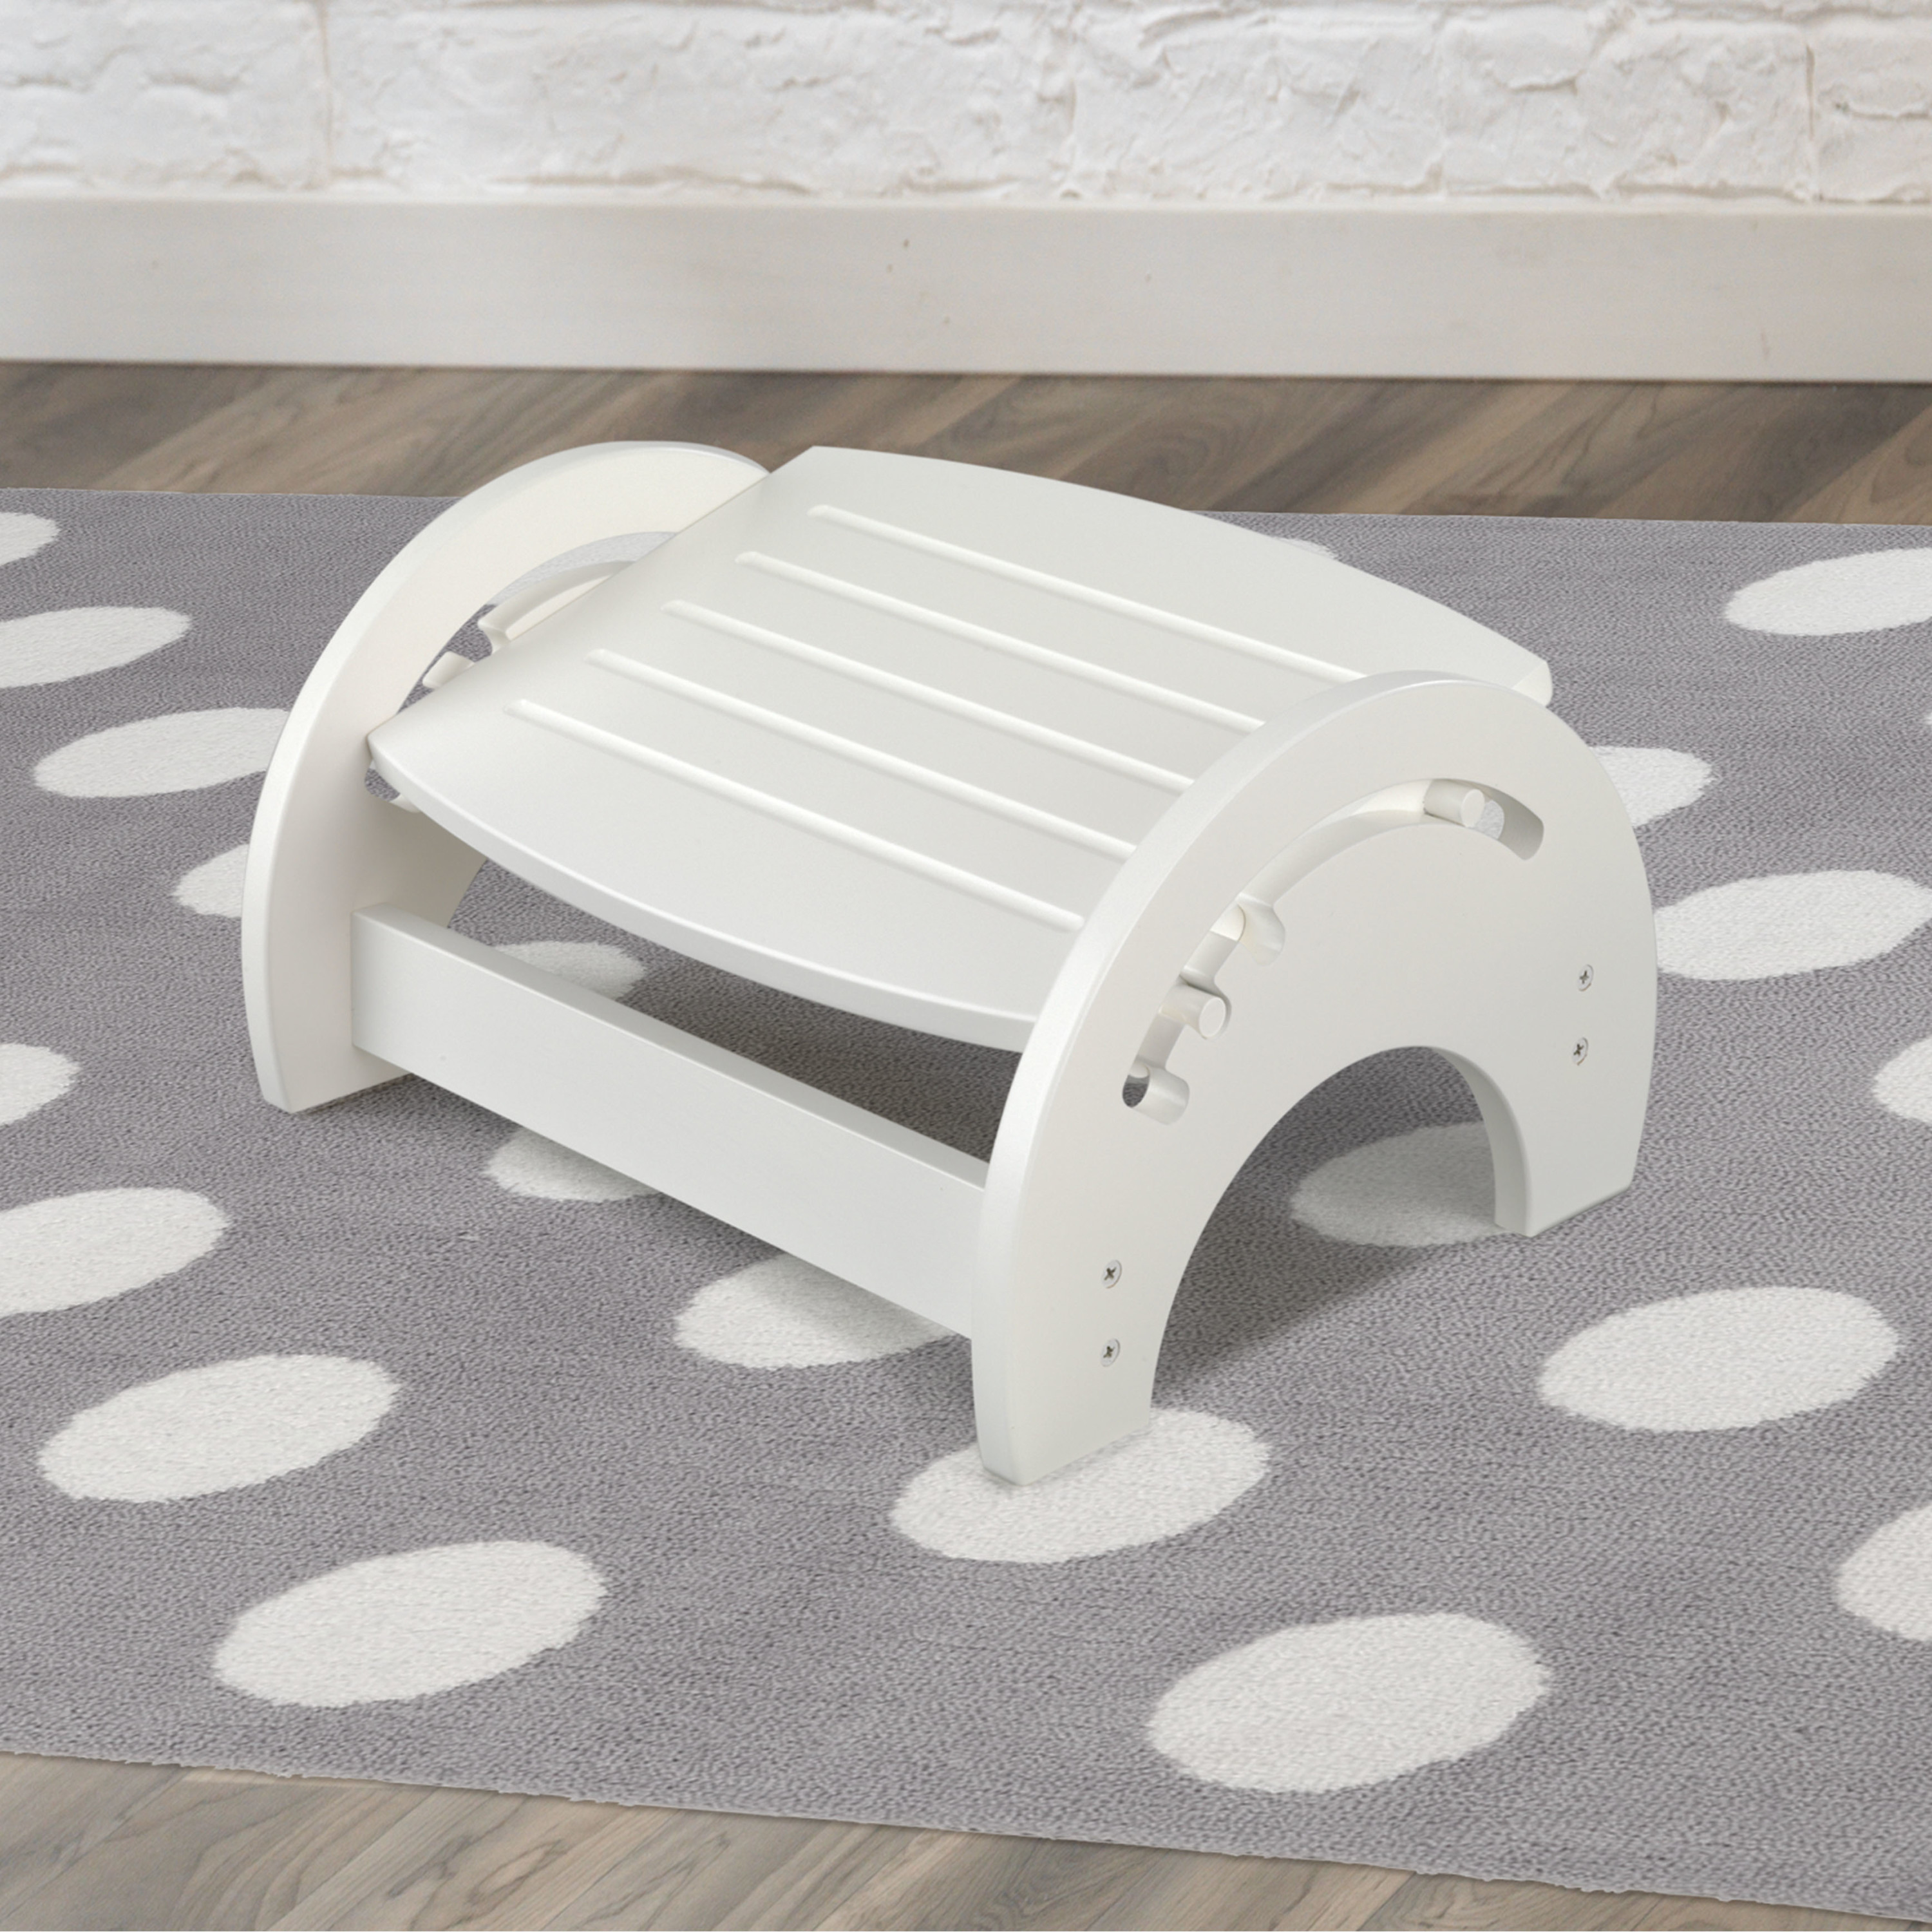 KidKraft Wooden Adjustable Footstool for Nursing with Anti-Slip Pads on Base - White - image 2 of 2